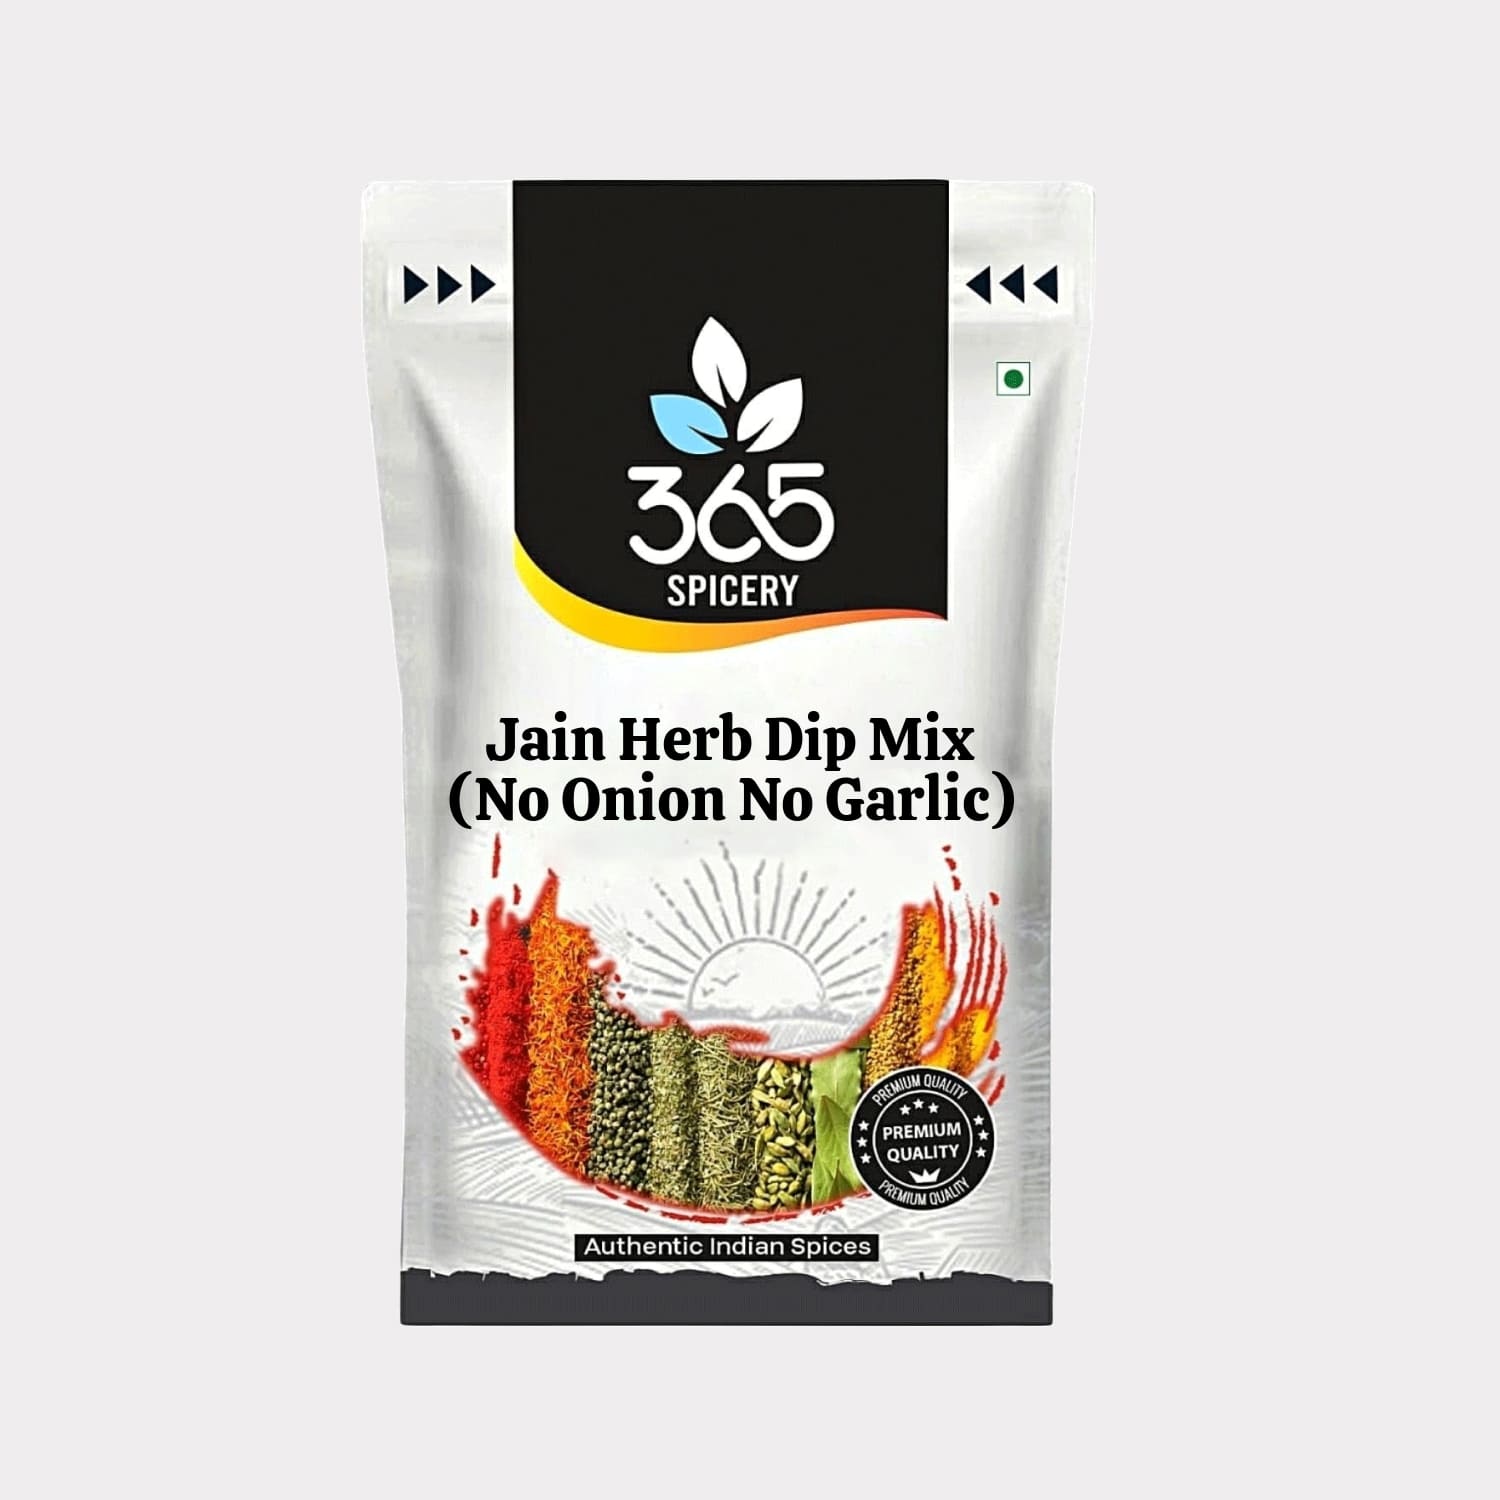 Jain Herb Dip Mix (No Onion No Garlic)